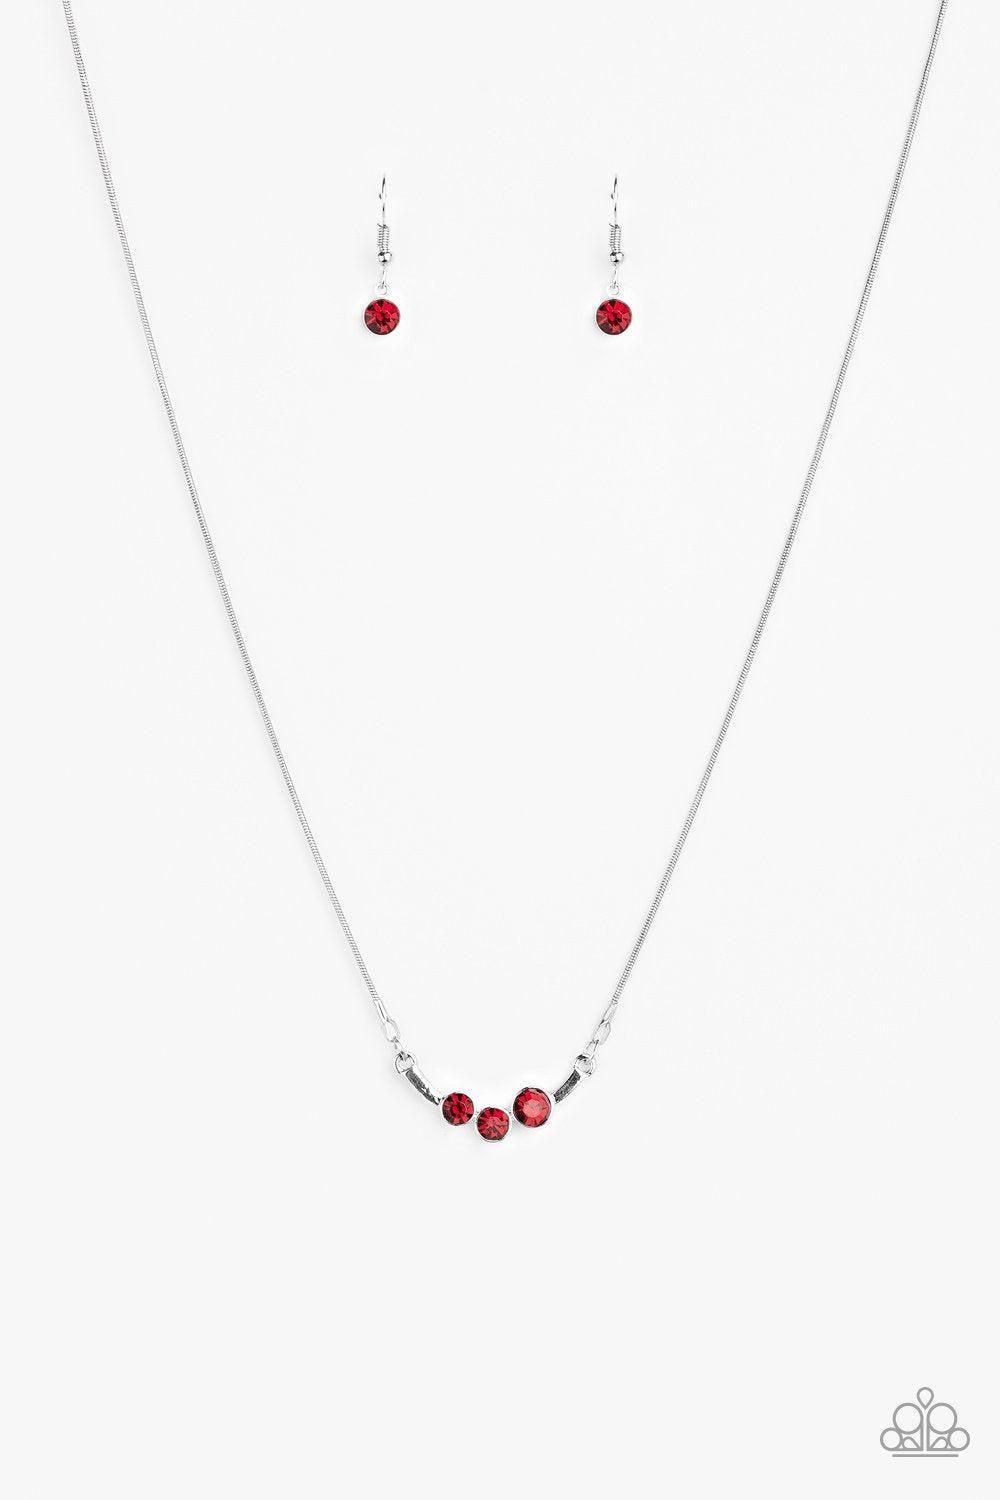 Sparkling Stargazer Red Rhinestone Necklace - Paparazzi Accessories-CarasShop.com - $5 Jewelry by Cara Jewels